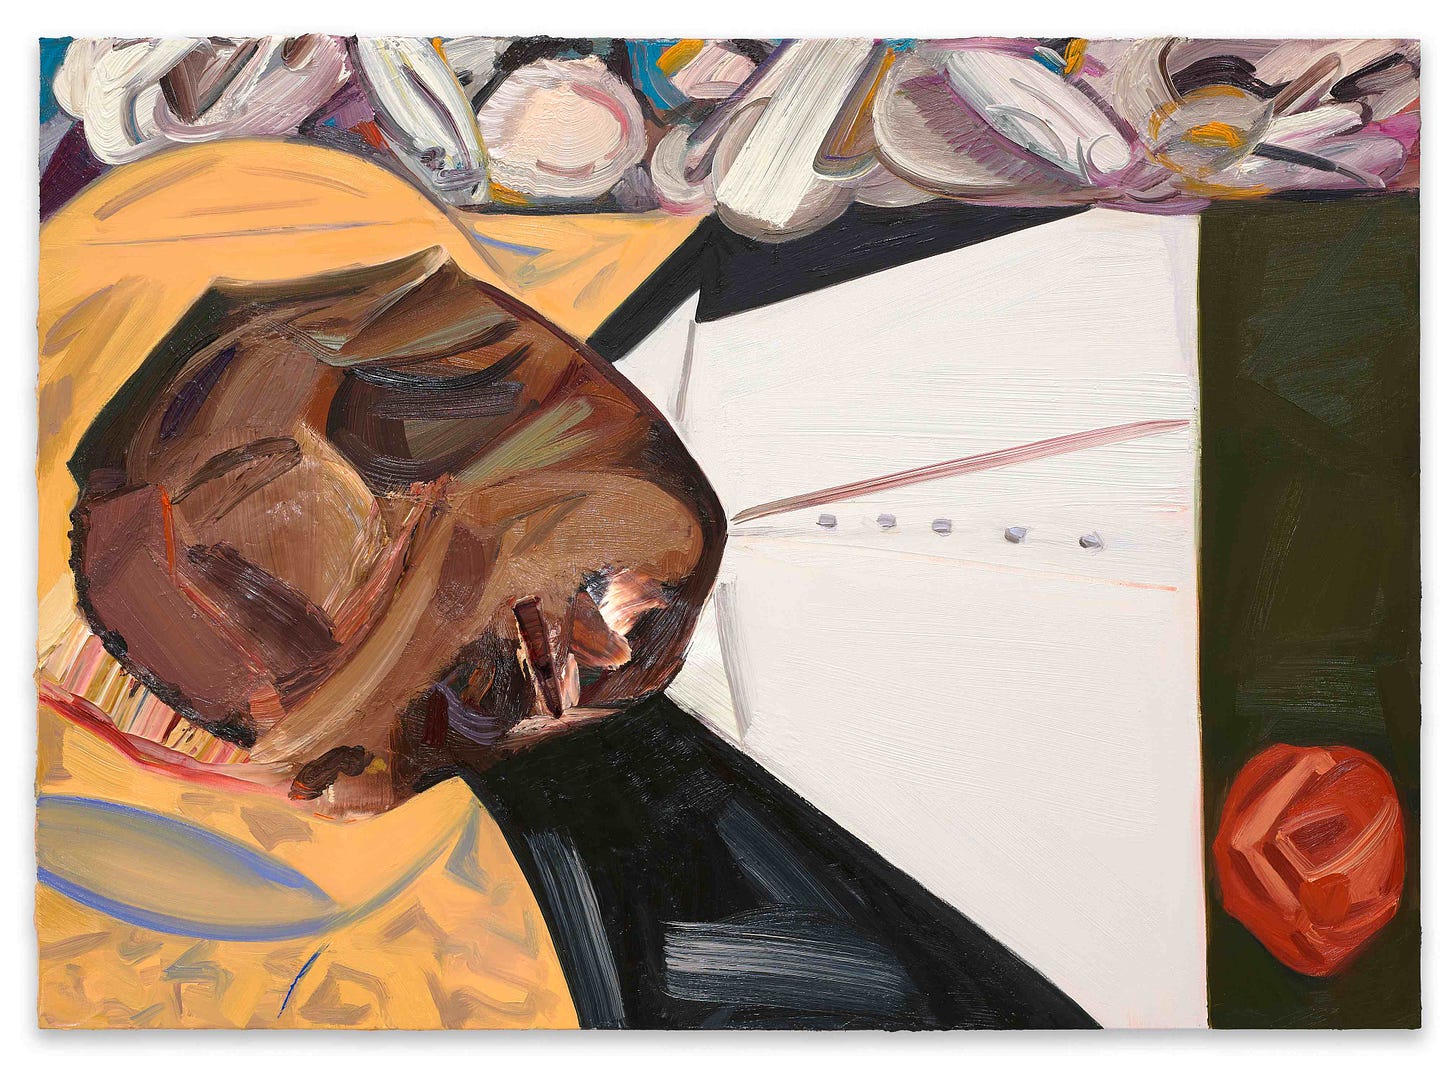 (‘Open Casket’ by Dana Schutz, 99 x 135 cm, Oil on Canvas, 2016, sourced from Google)